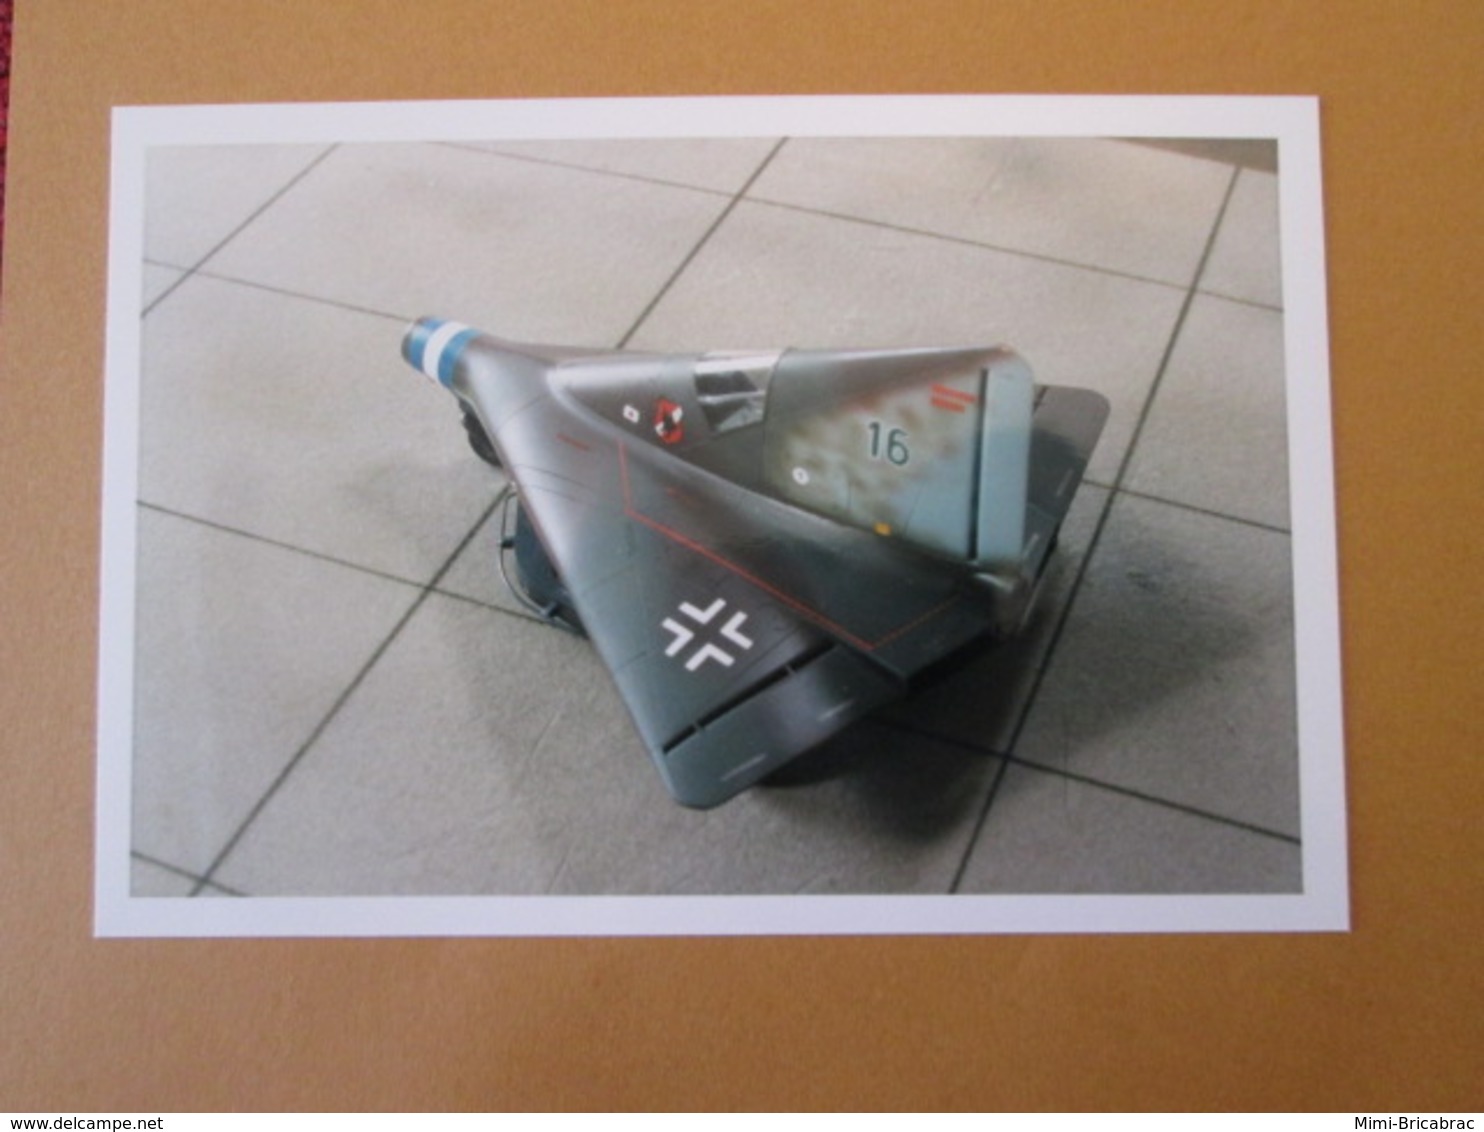 CAGI3 Format Carte Postale Env 15x10cm : SUPERBE (TIRAGE UNIQUE) PHOTO MAQUETTE PLASTIQUE 1/48 AILE VOLANTE LIPPISCH - Vliegtuigen